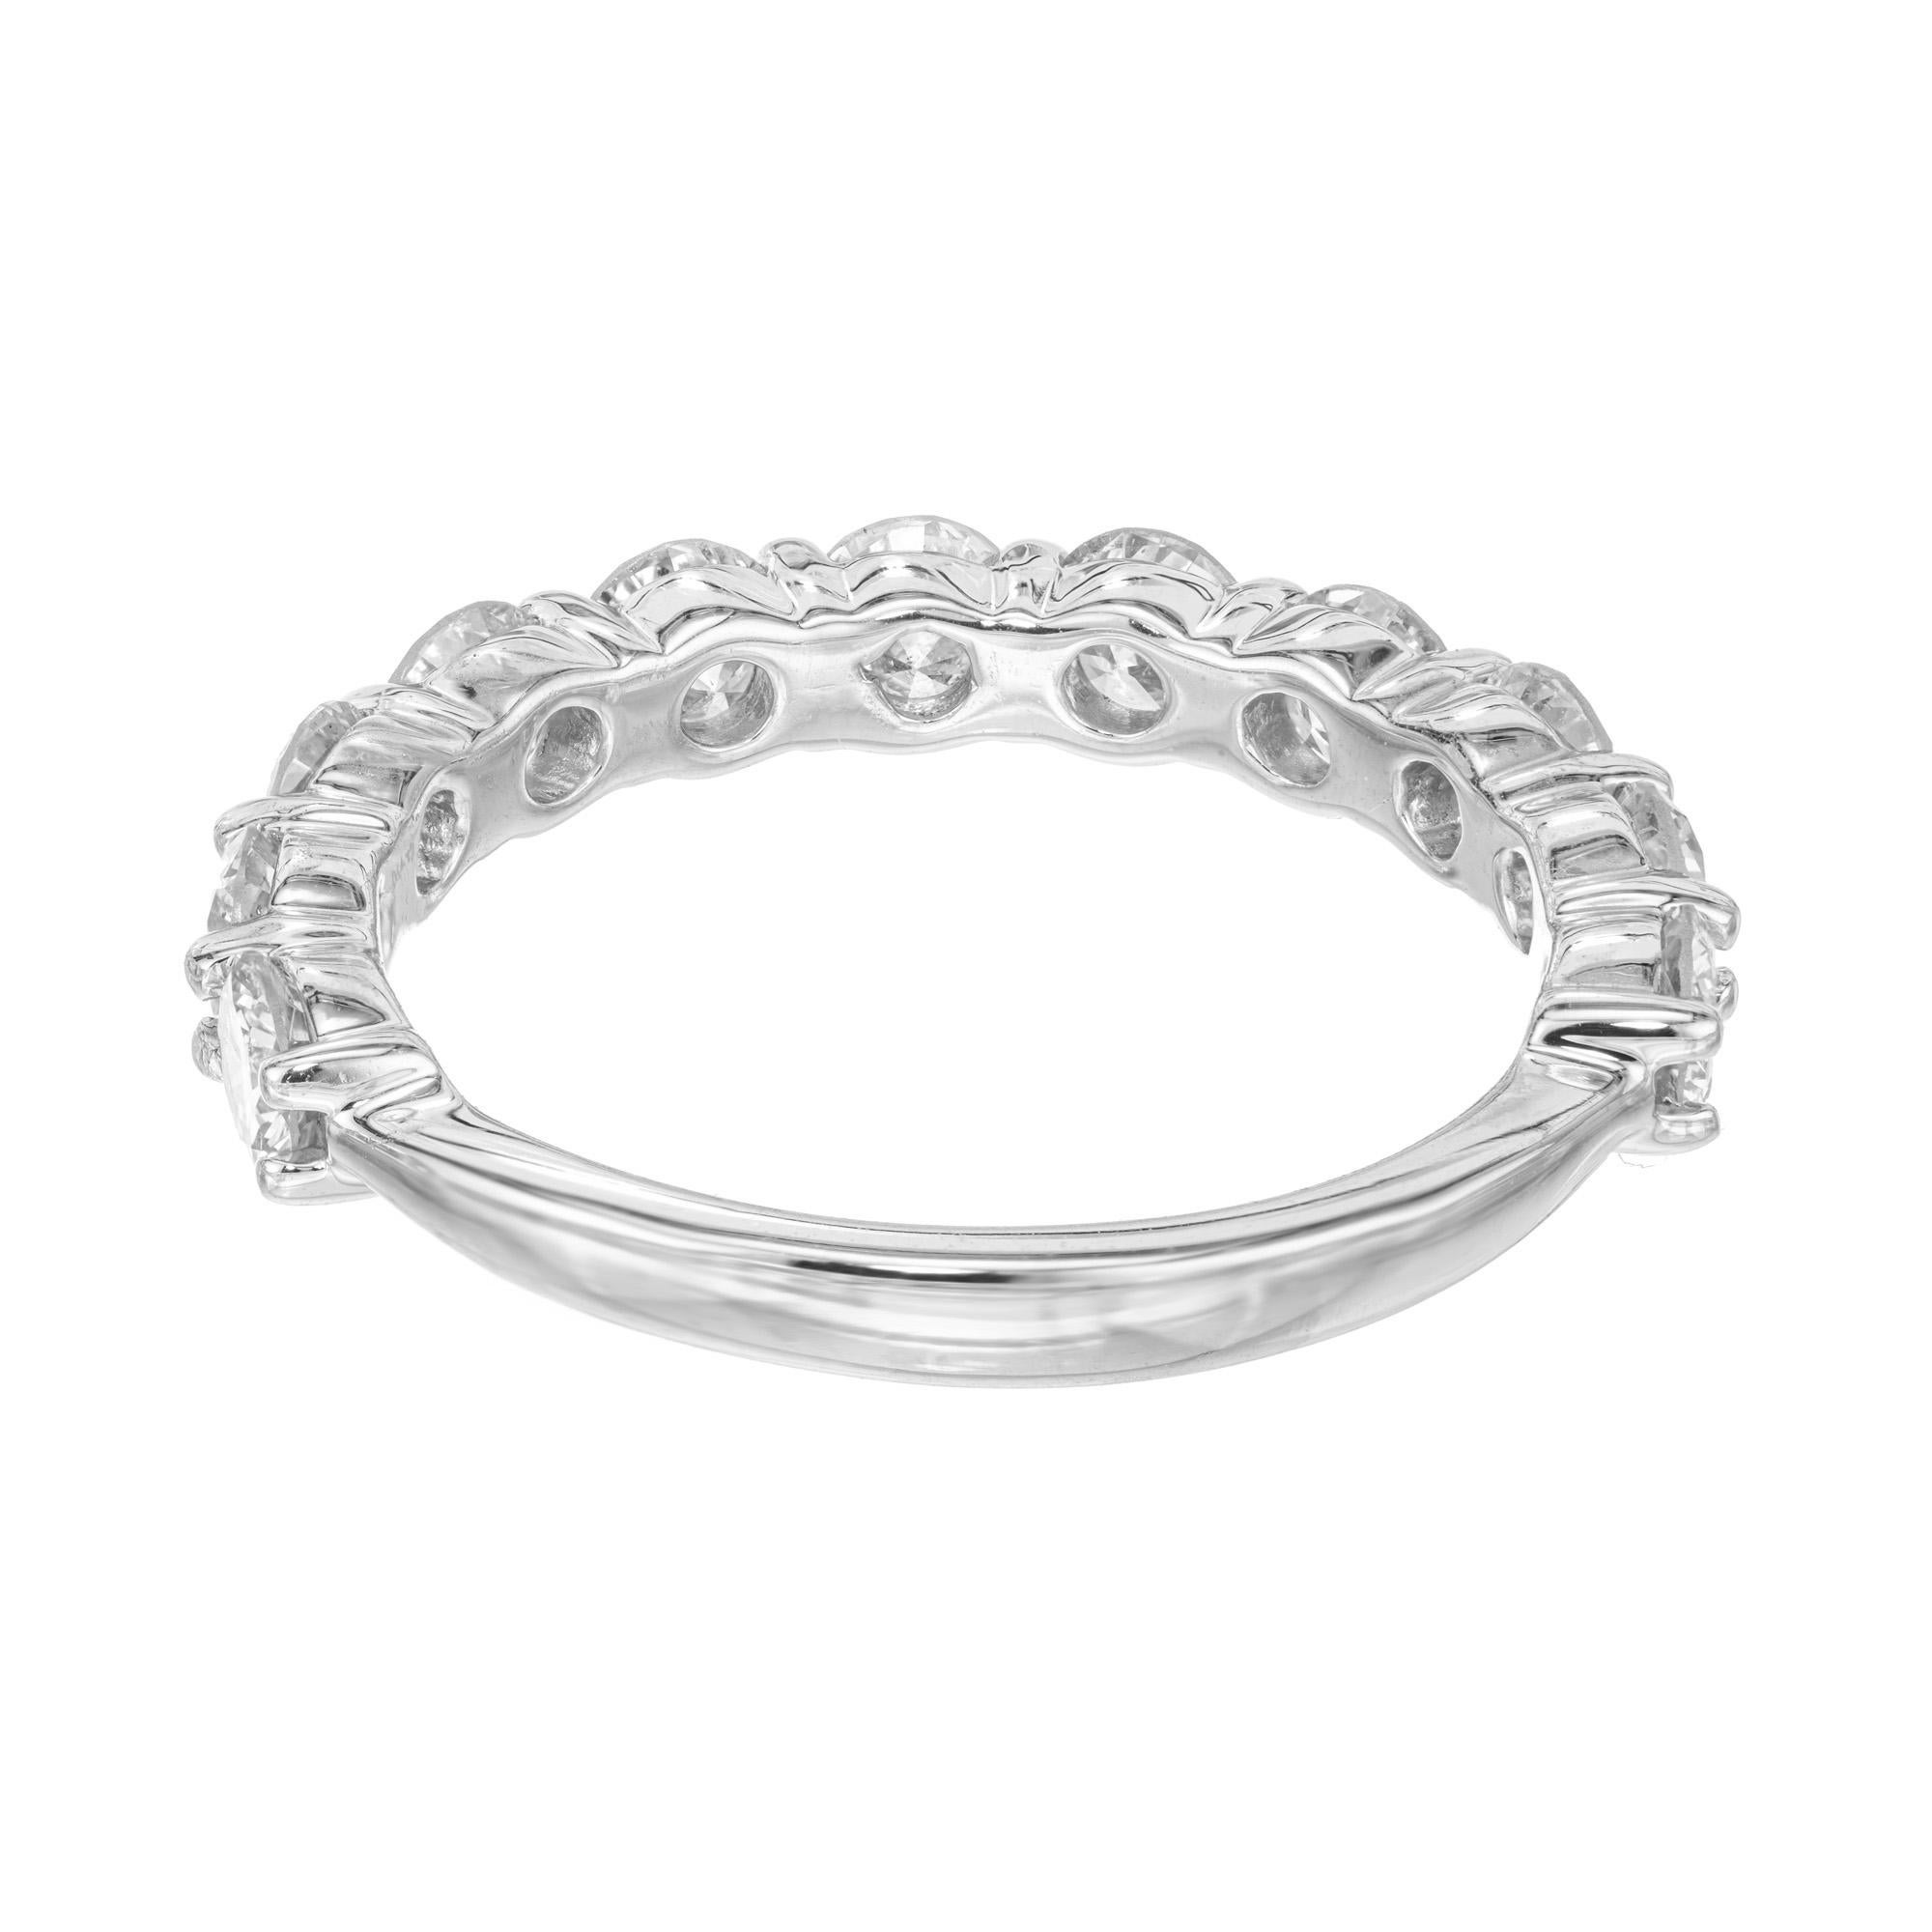 Women's Peter Suchy 1.67 Carat Round Diamond Platinum Wedding Band Ring For Sale